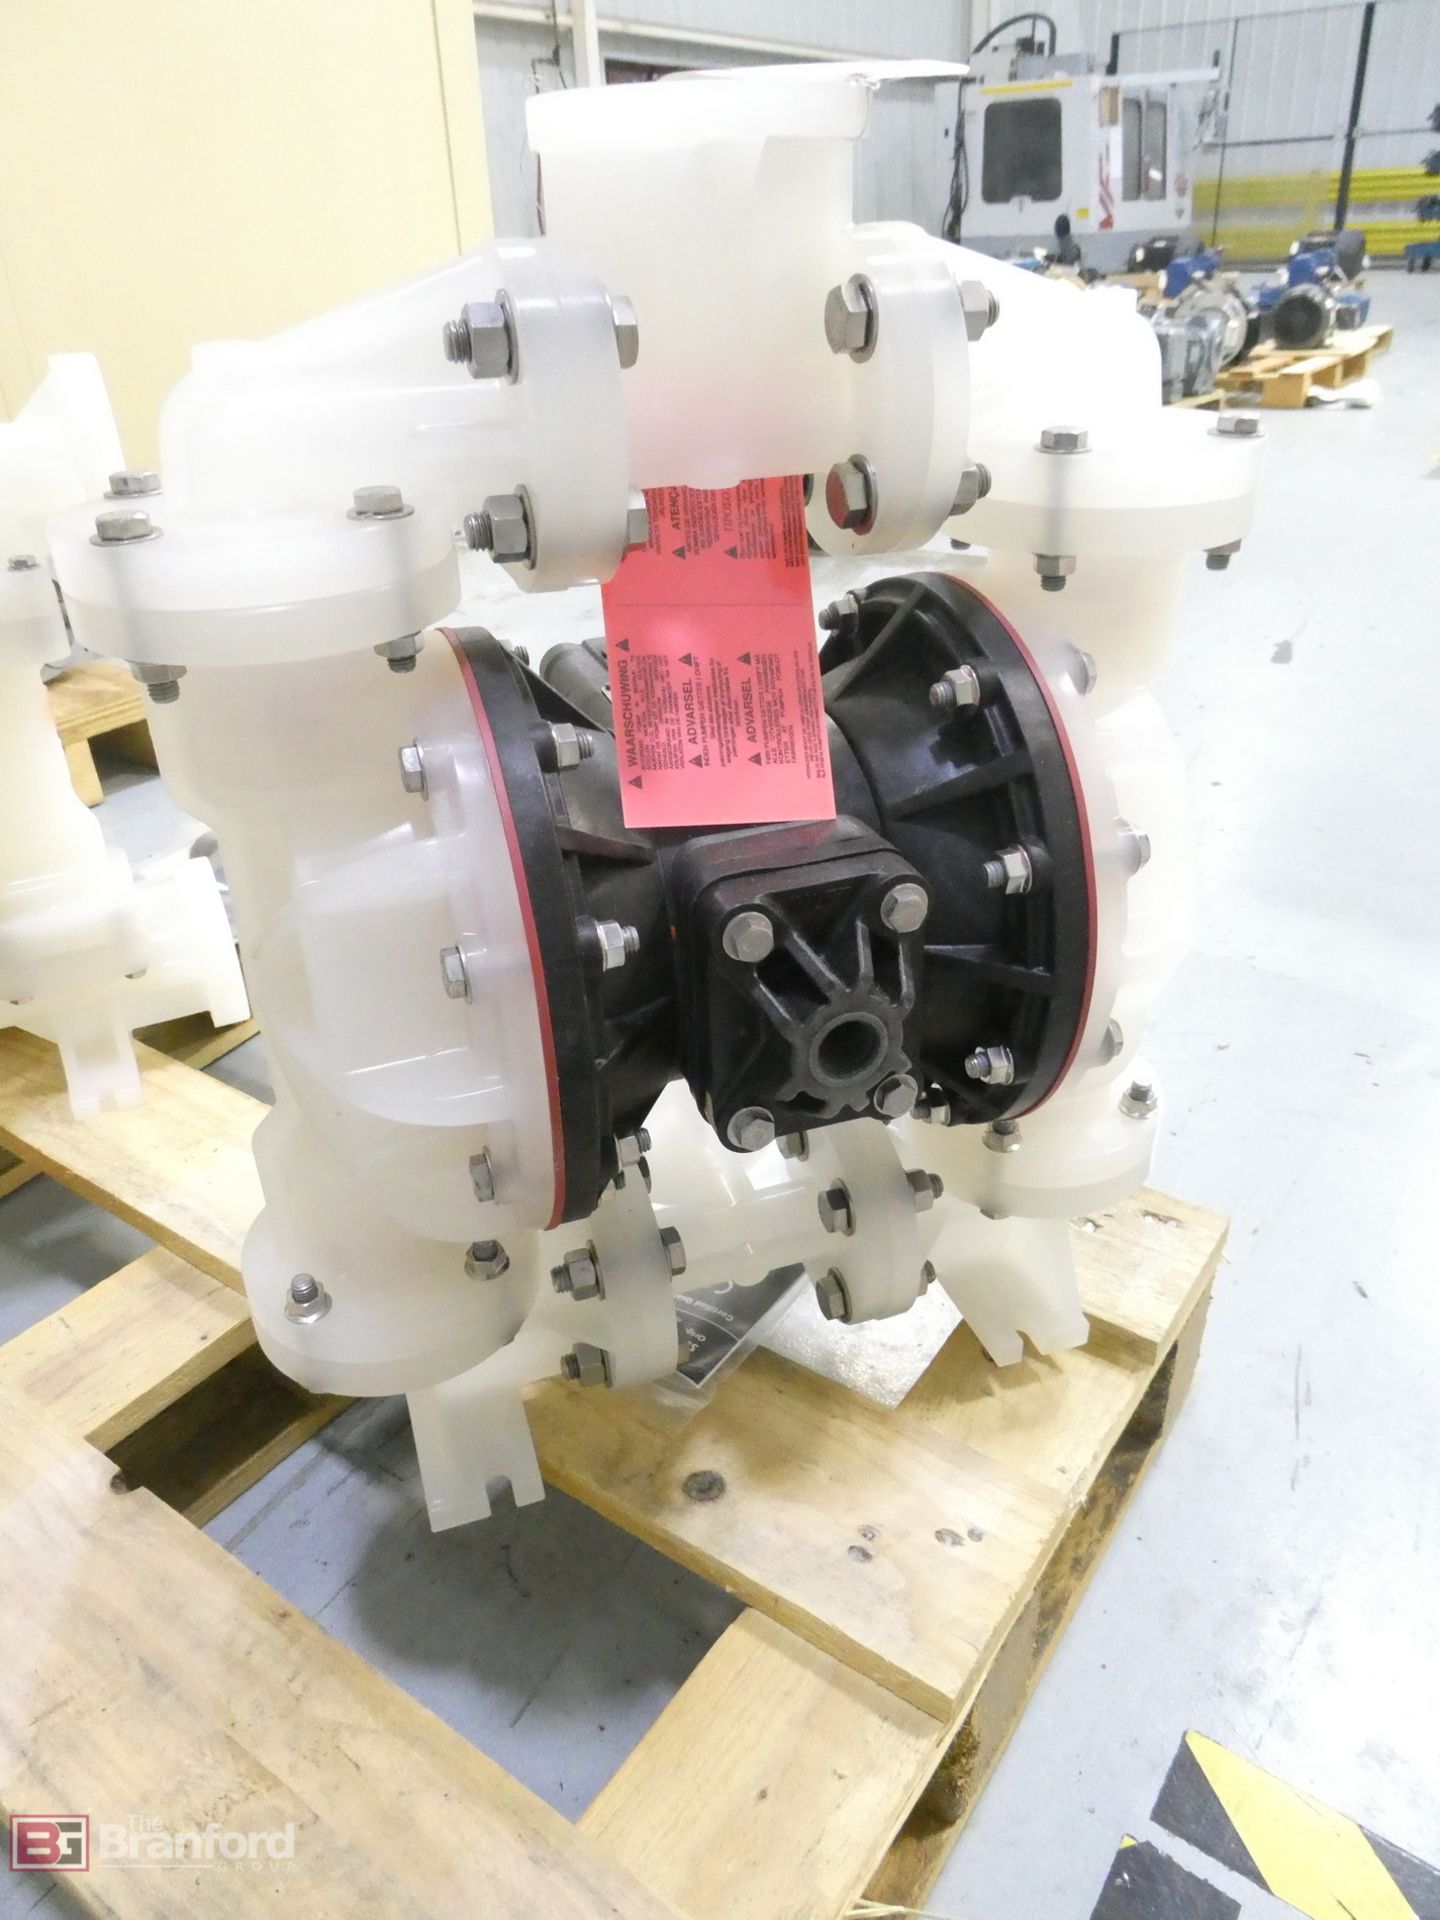 Sandpiper Model S1F, Non-Metallic Diaphragm Pump (New) - Image 2 of 4